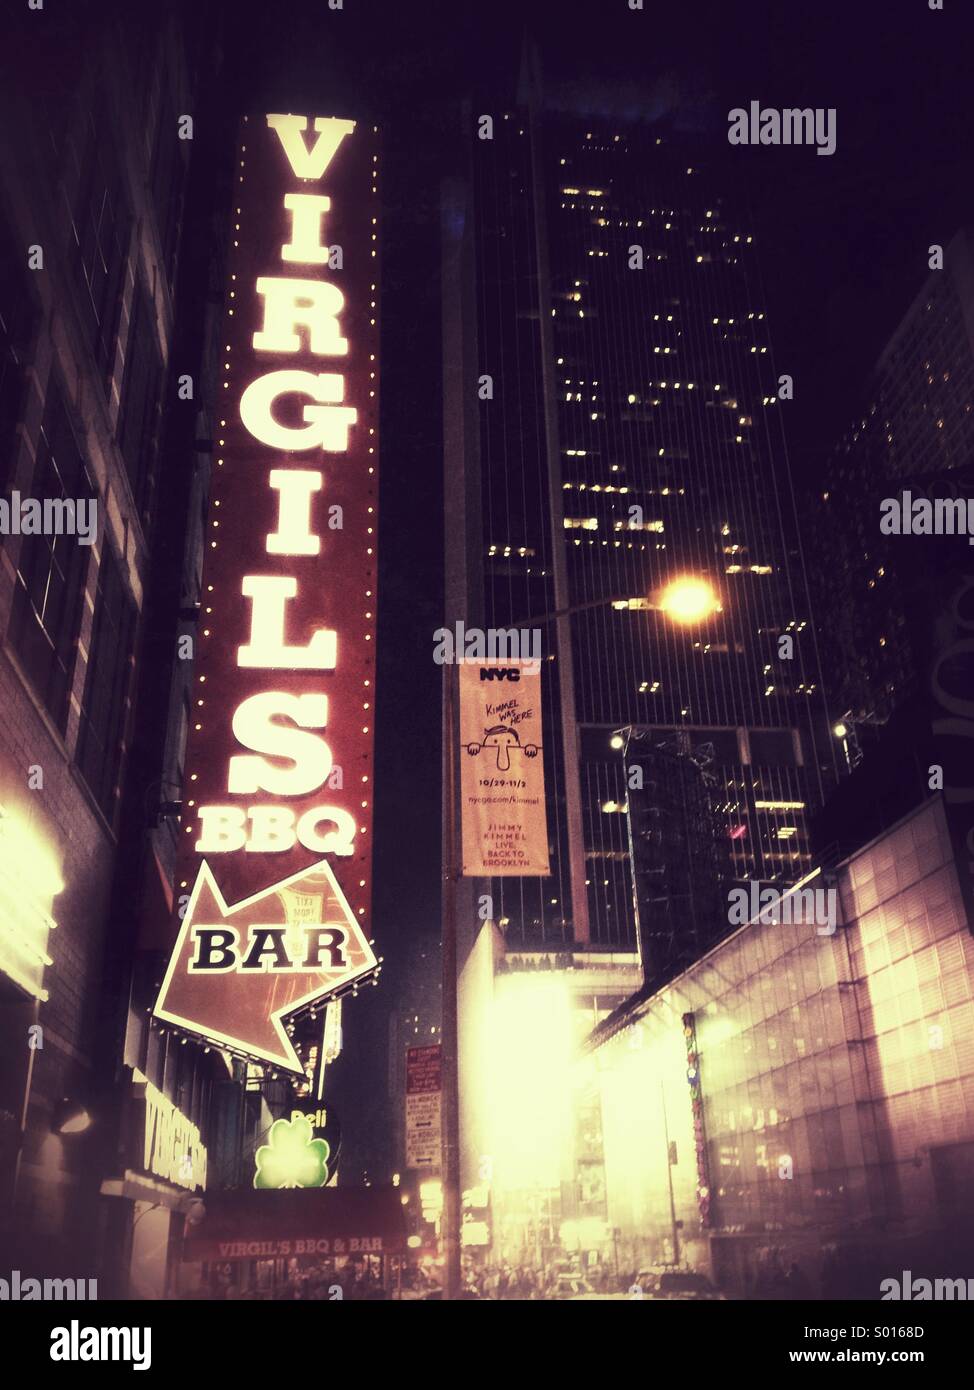 Virgil's grill restaurant sign in Manhattan, New York Stock Photo